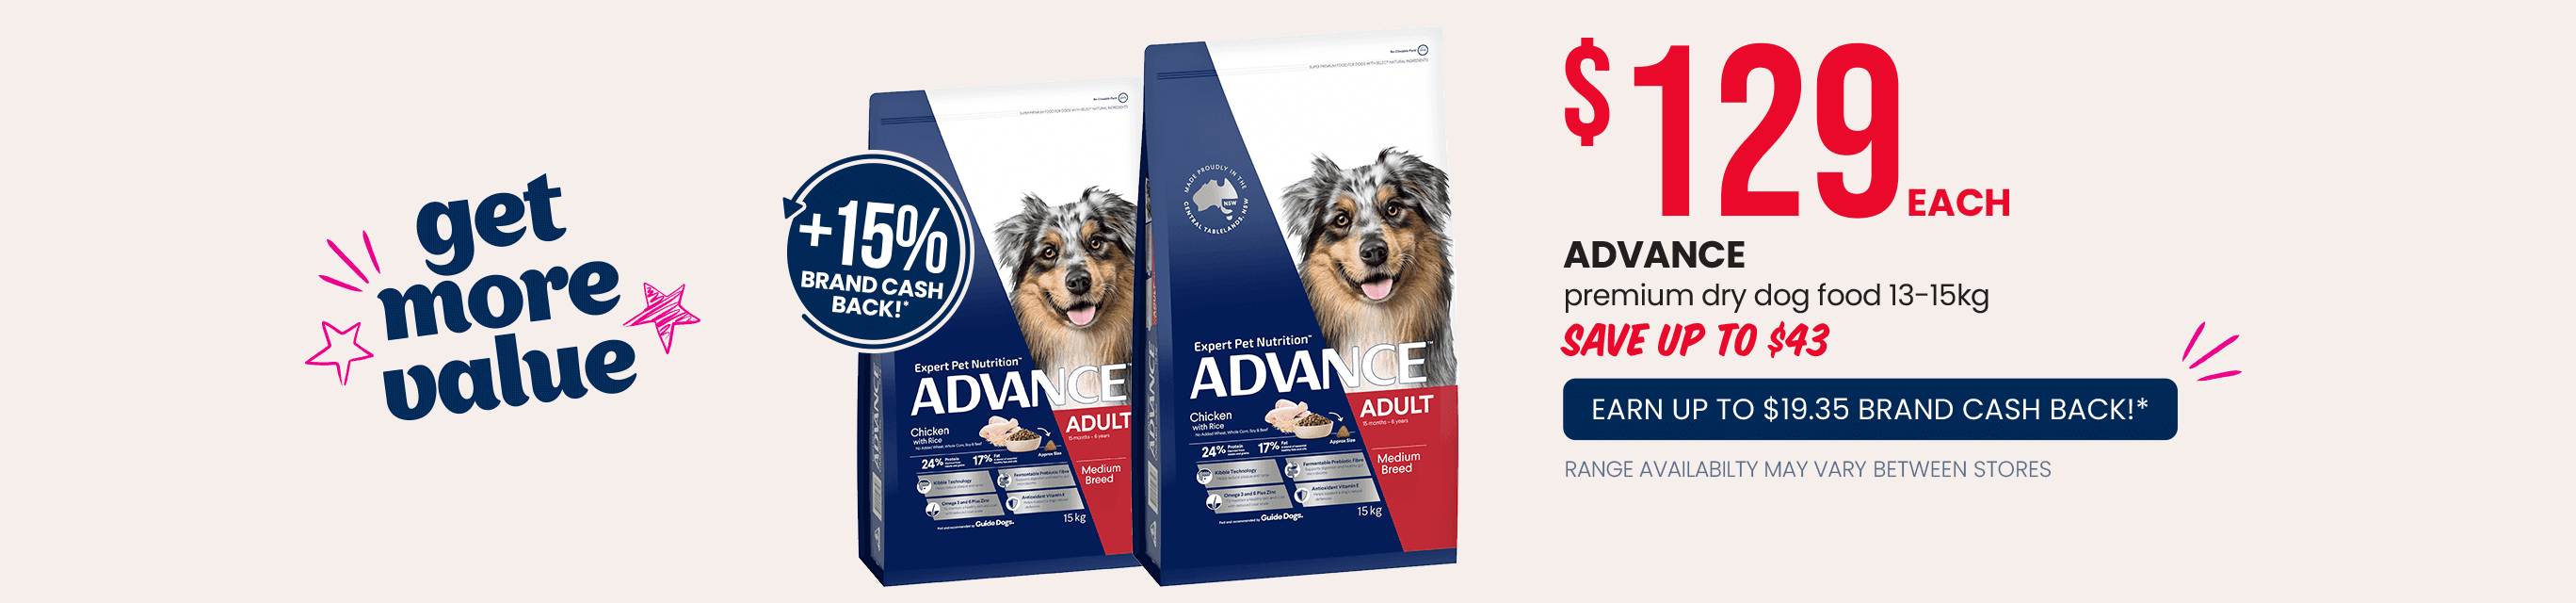 Advance Dry Dog Food $129